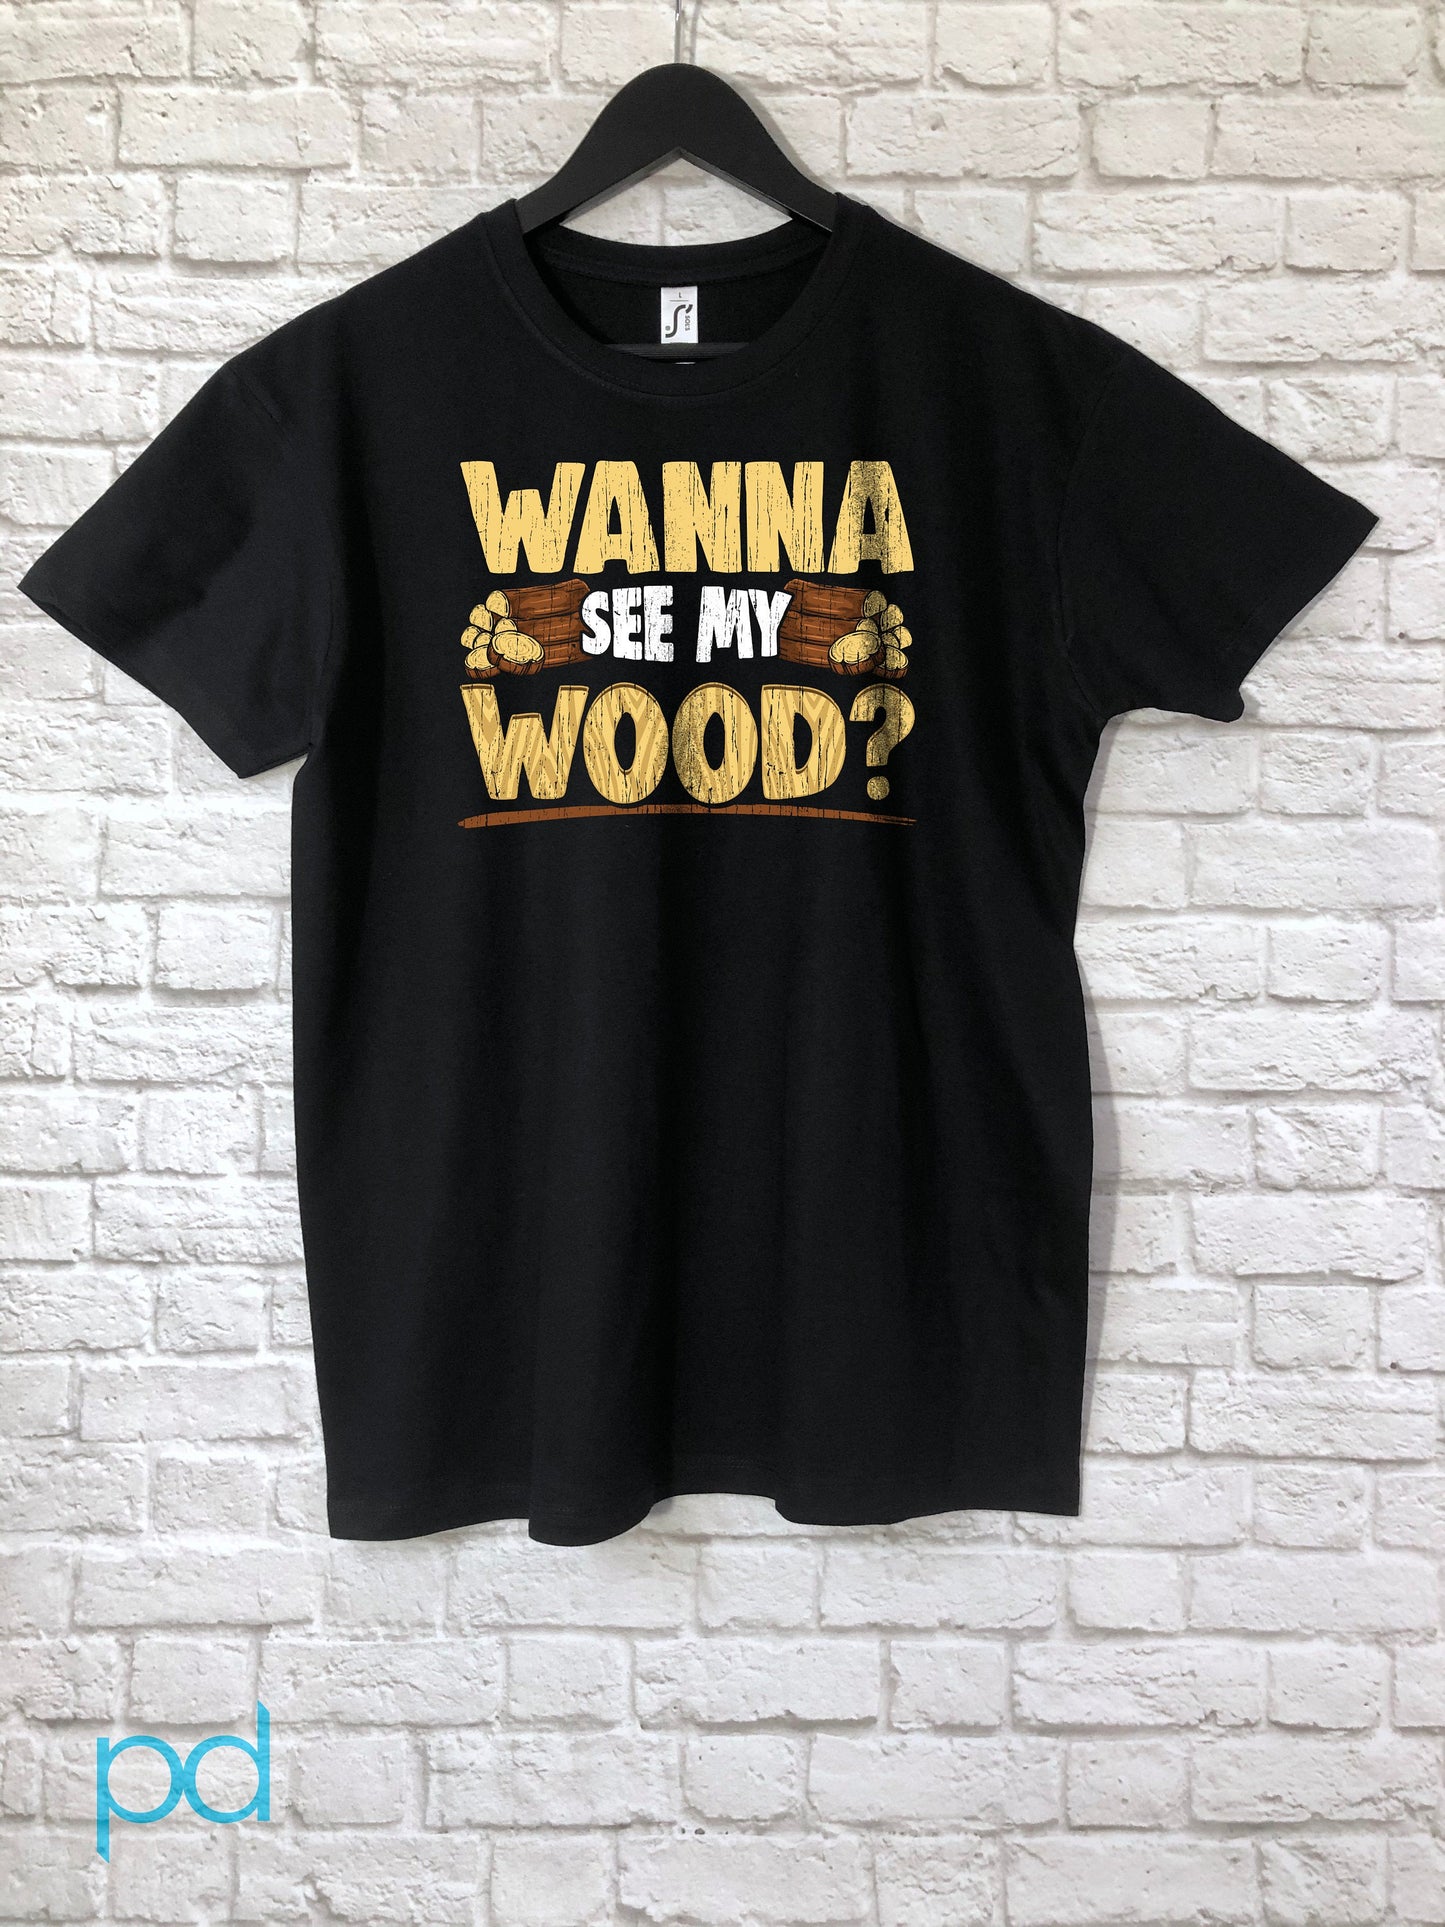 Funny Woodwork T-Shirt, Carpenter Gift Idea, Humorous Graphic Print Tee Shirt Top, Wanna See My Wood? Meme